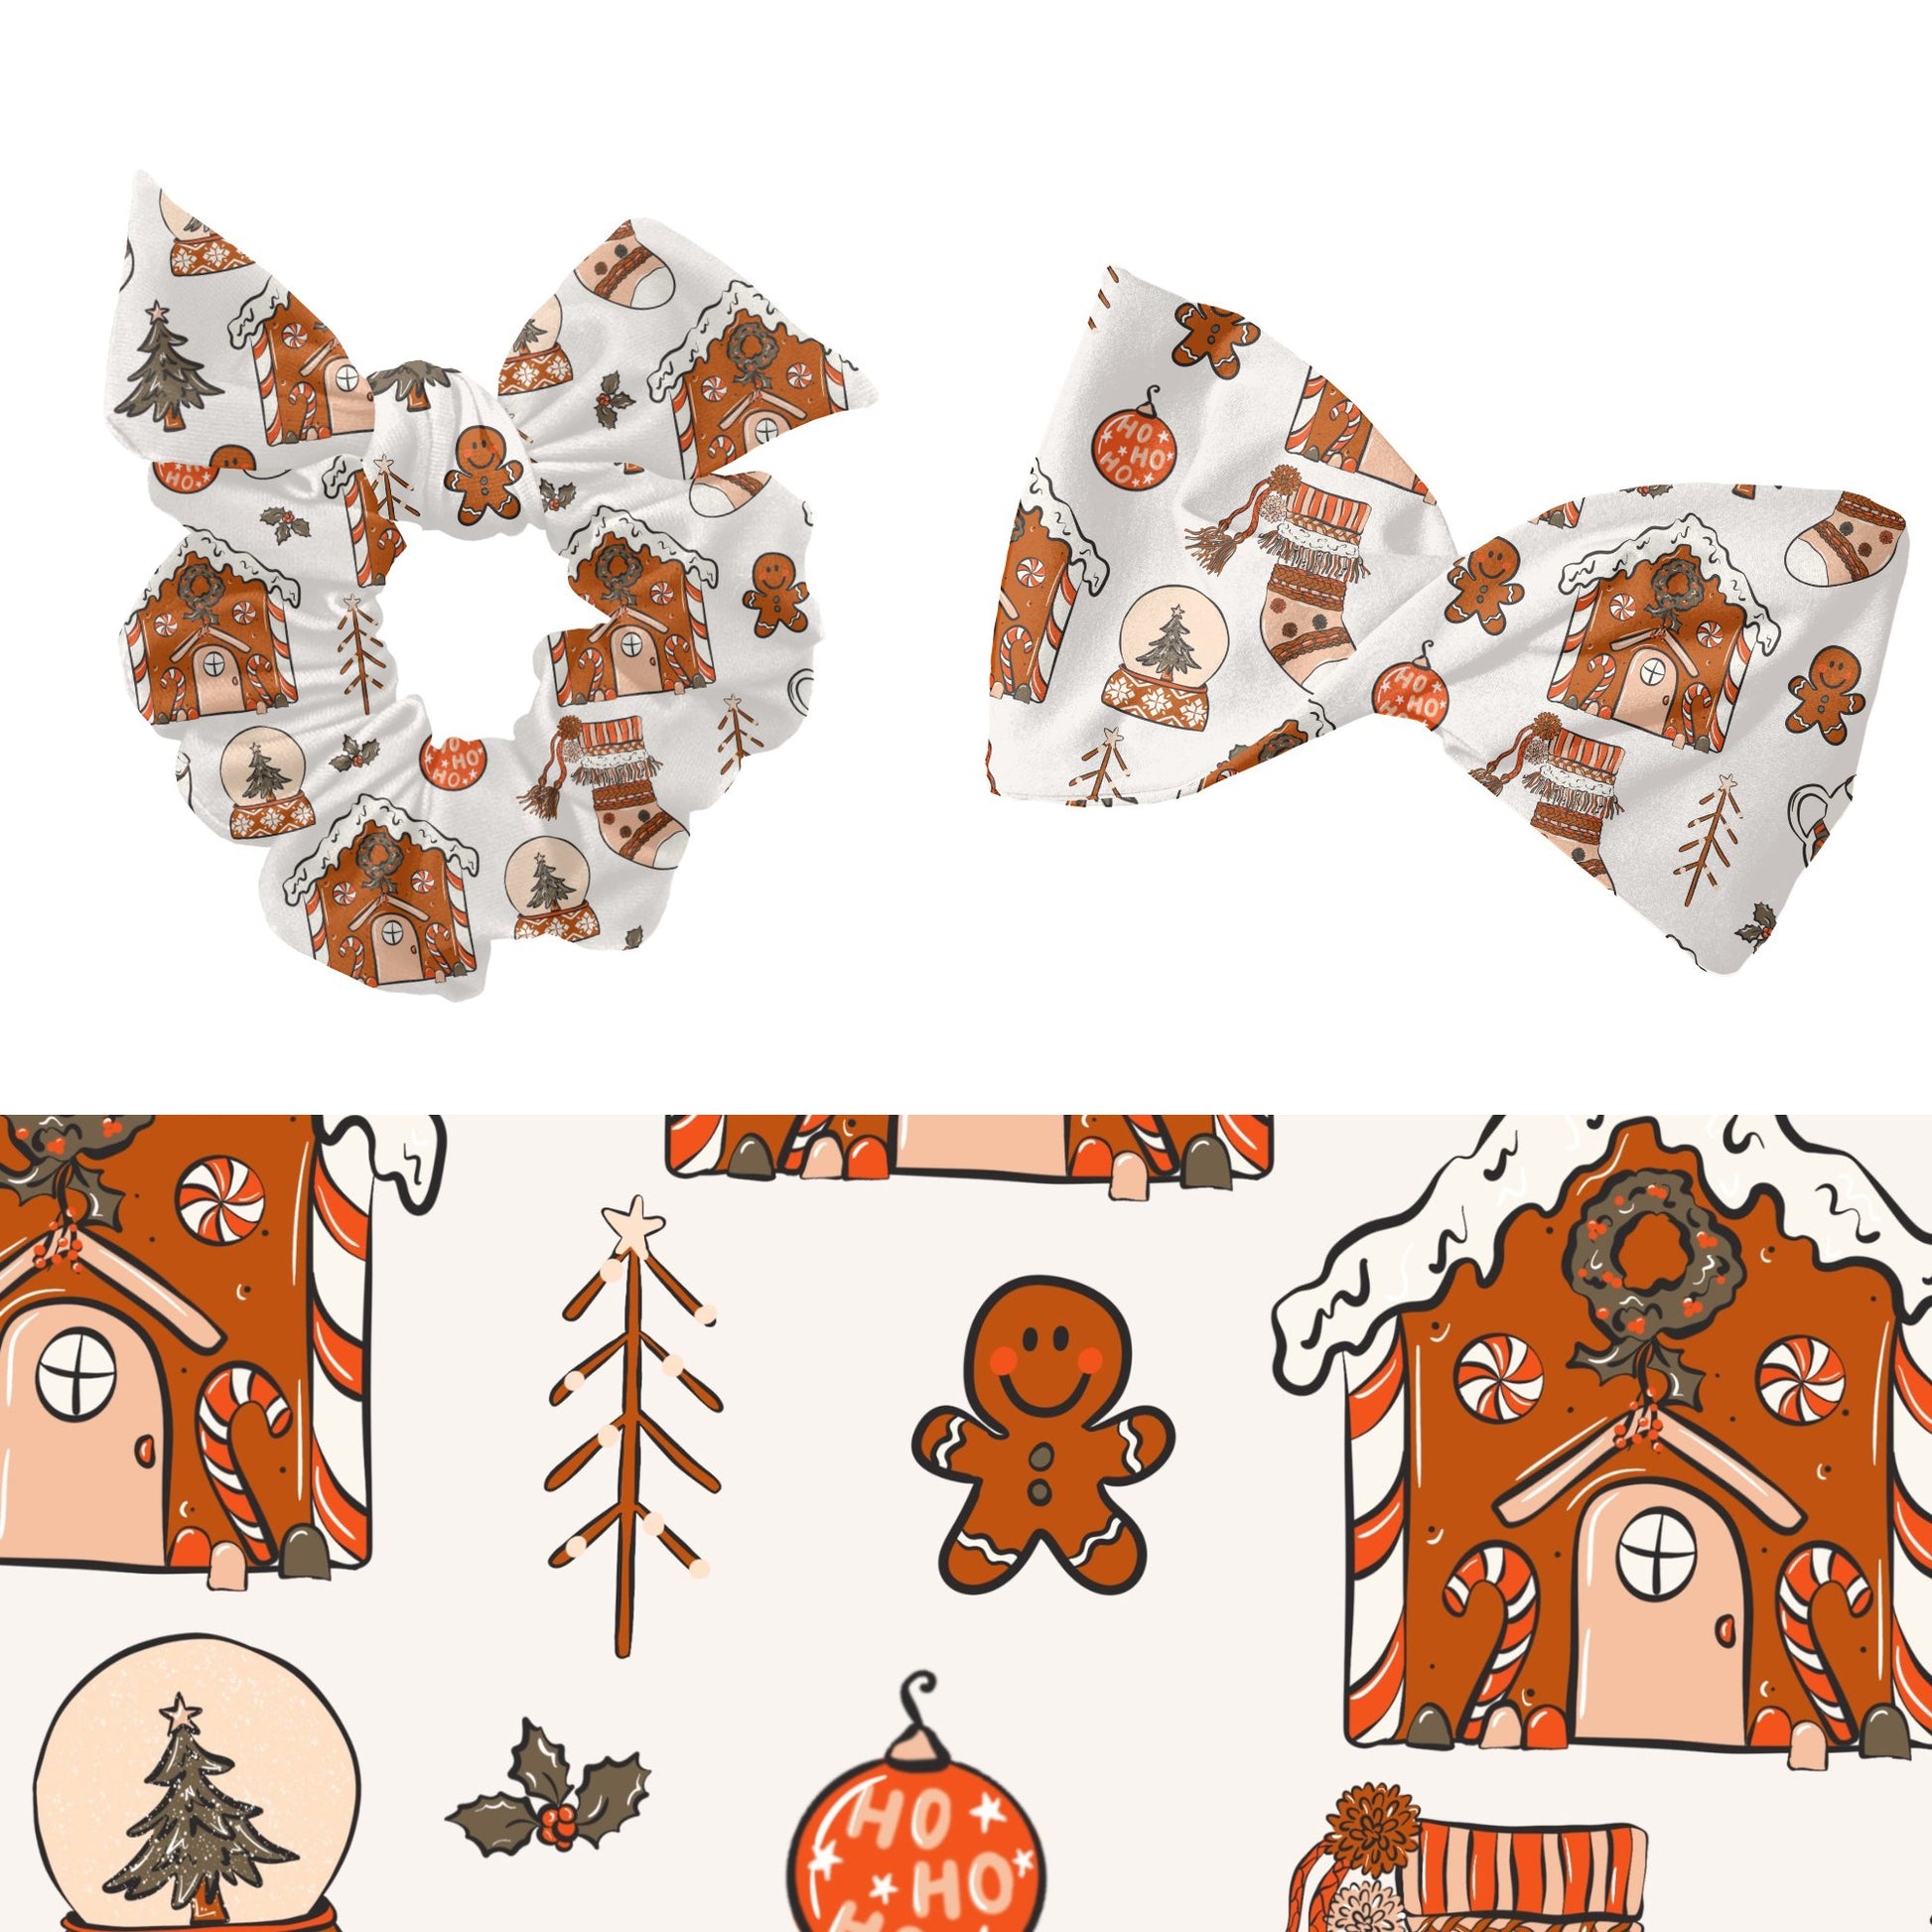 Christmas gingerbread seamless pattern - SkyyDesignsCo | Seamless Pattern Designs